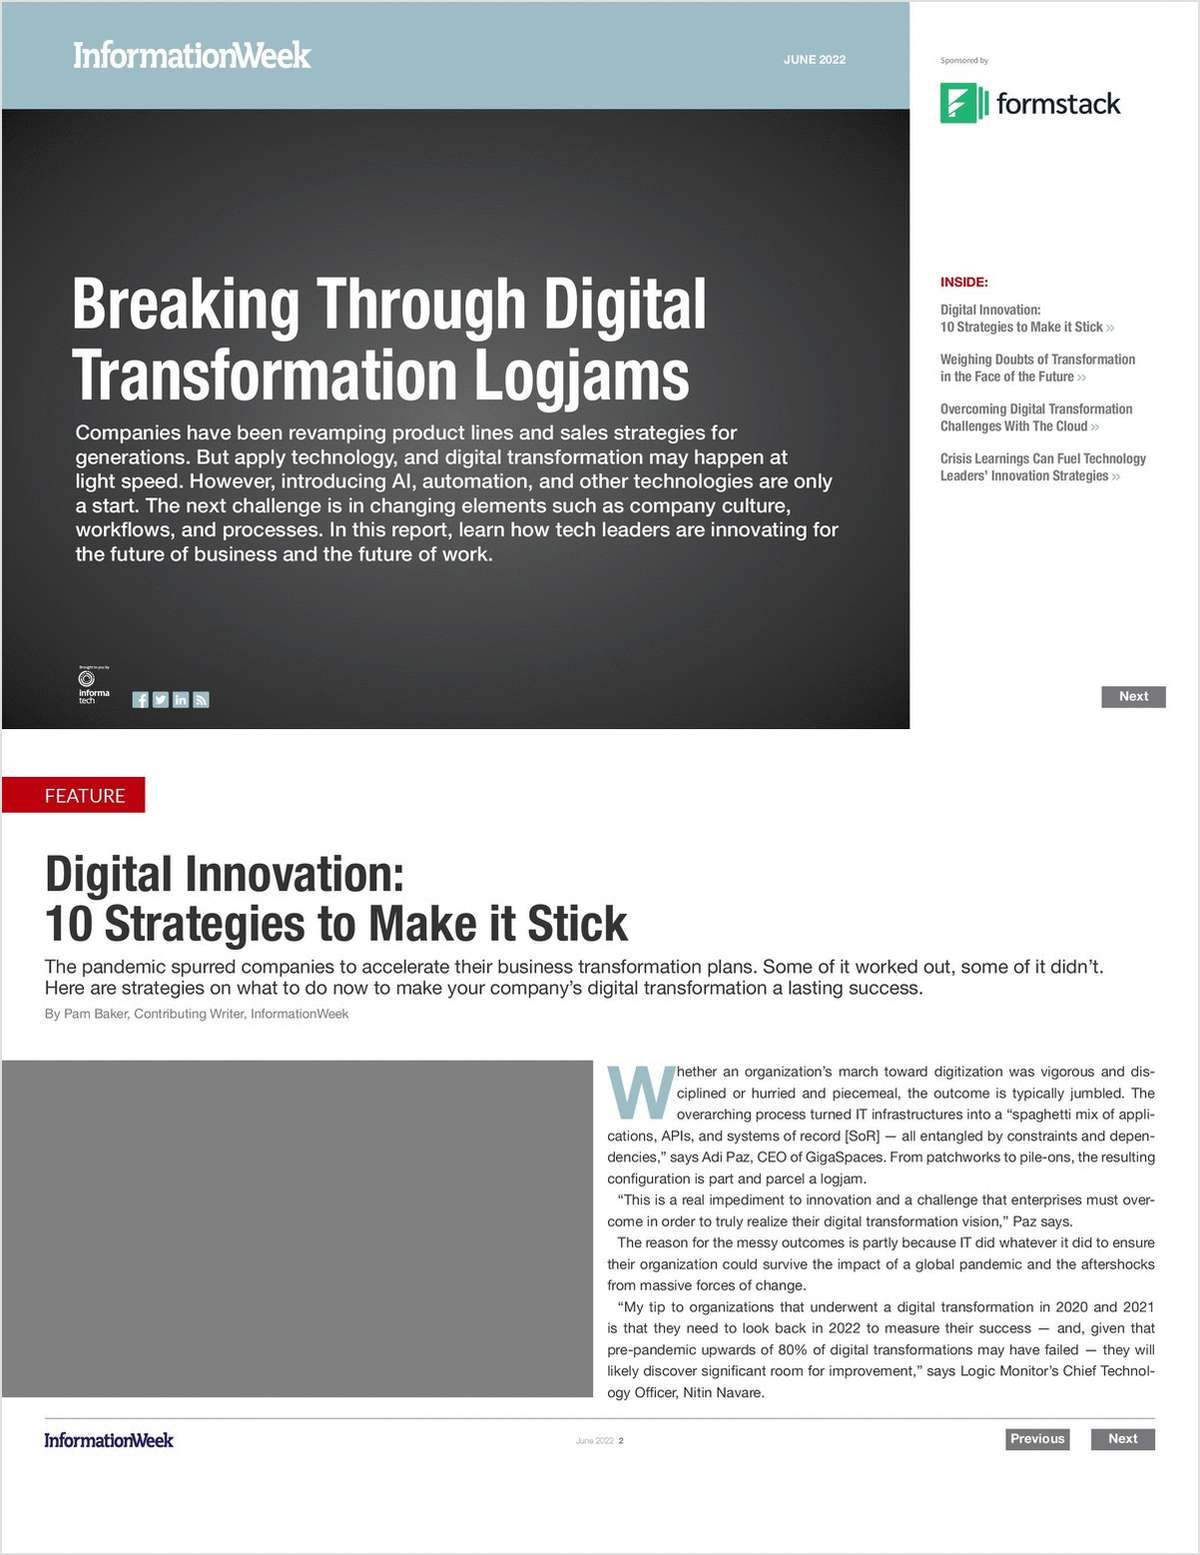 Breaking Through Digital Transformation Logjams